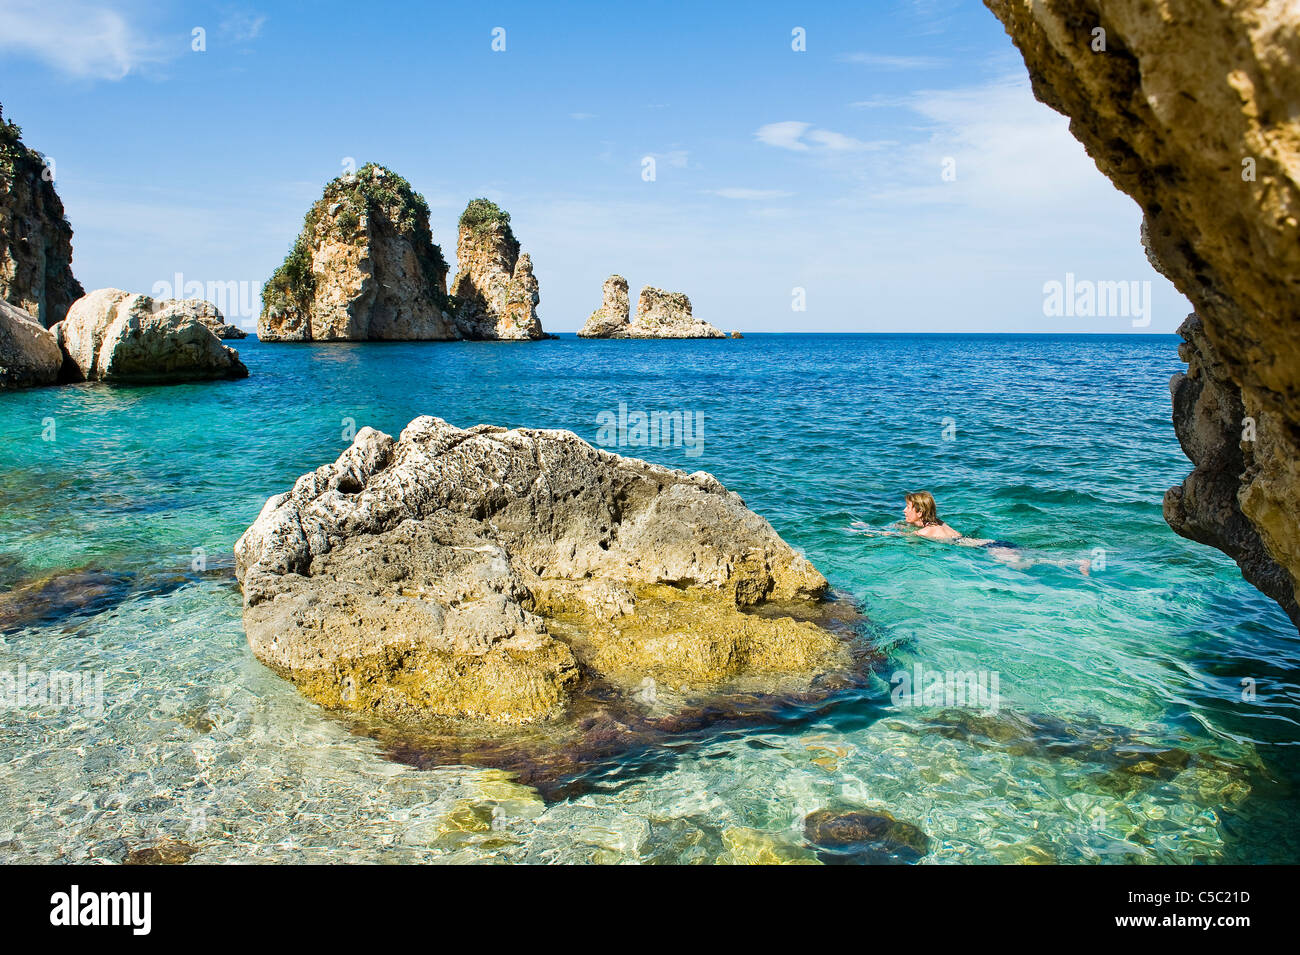 Woman swims in the Mediterranean sea, Sicily, Italy Stock Photo